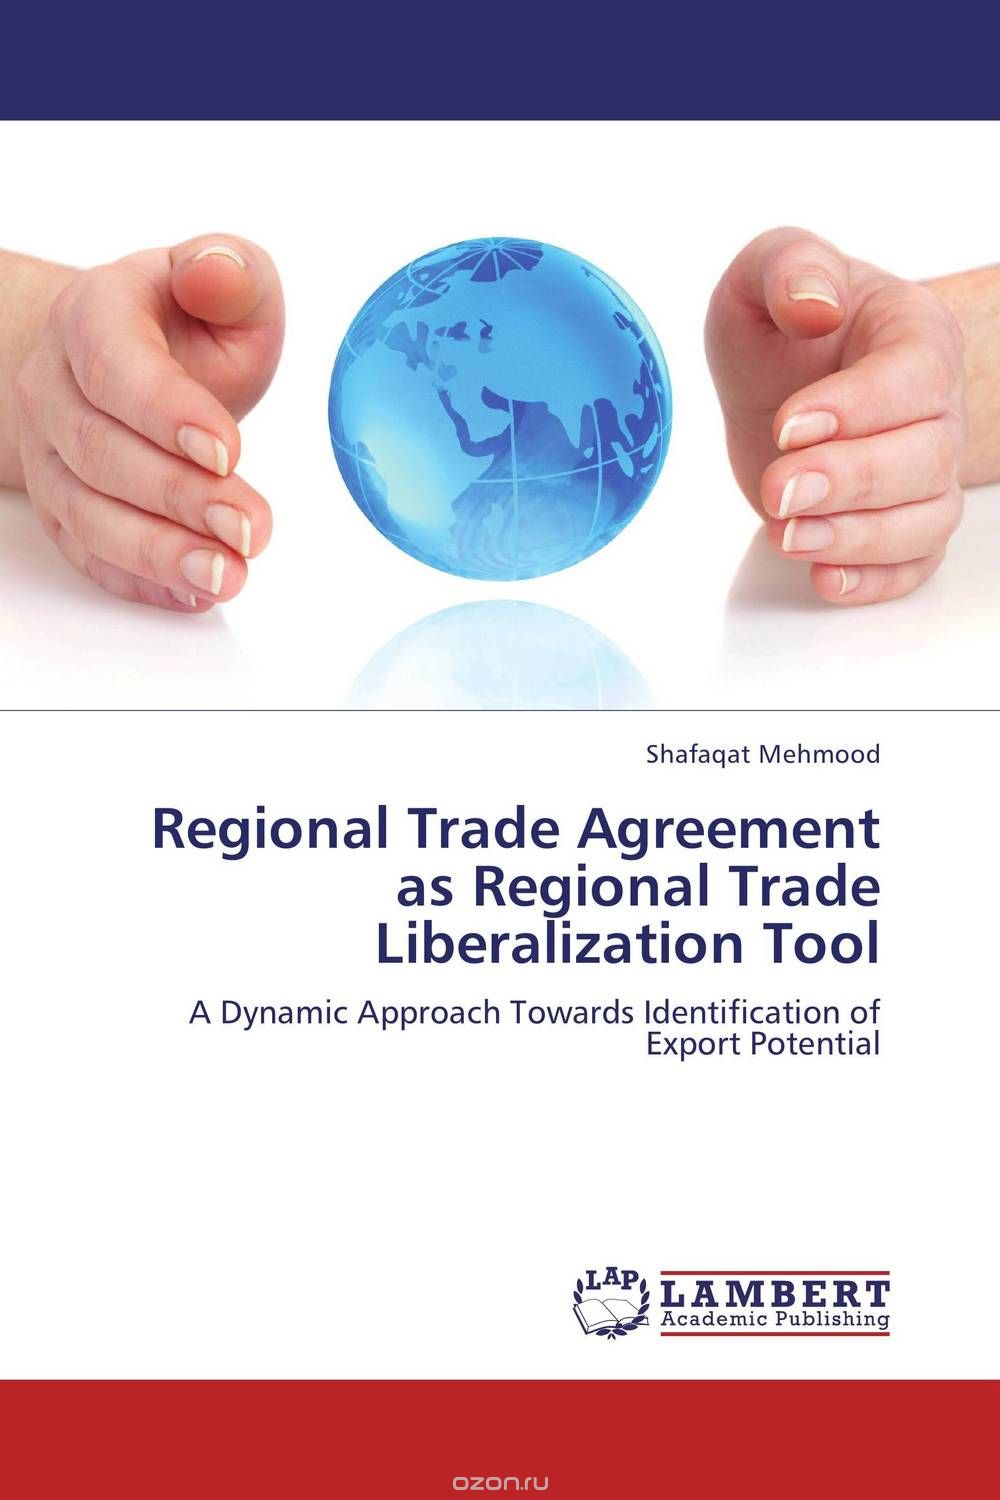 Скачать книгу "Regional Trade Agreement as Regional Trade Liberalization Tool"